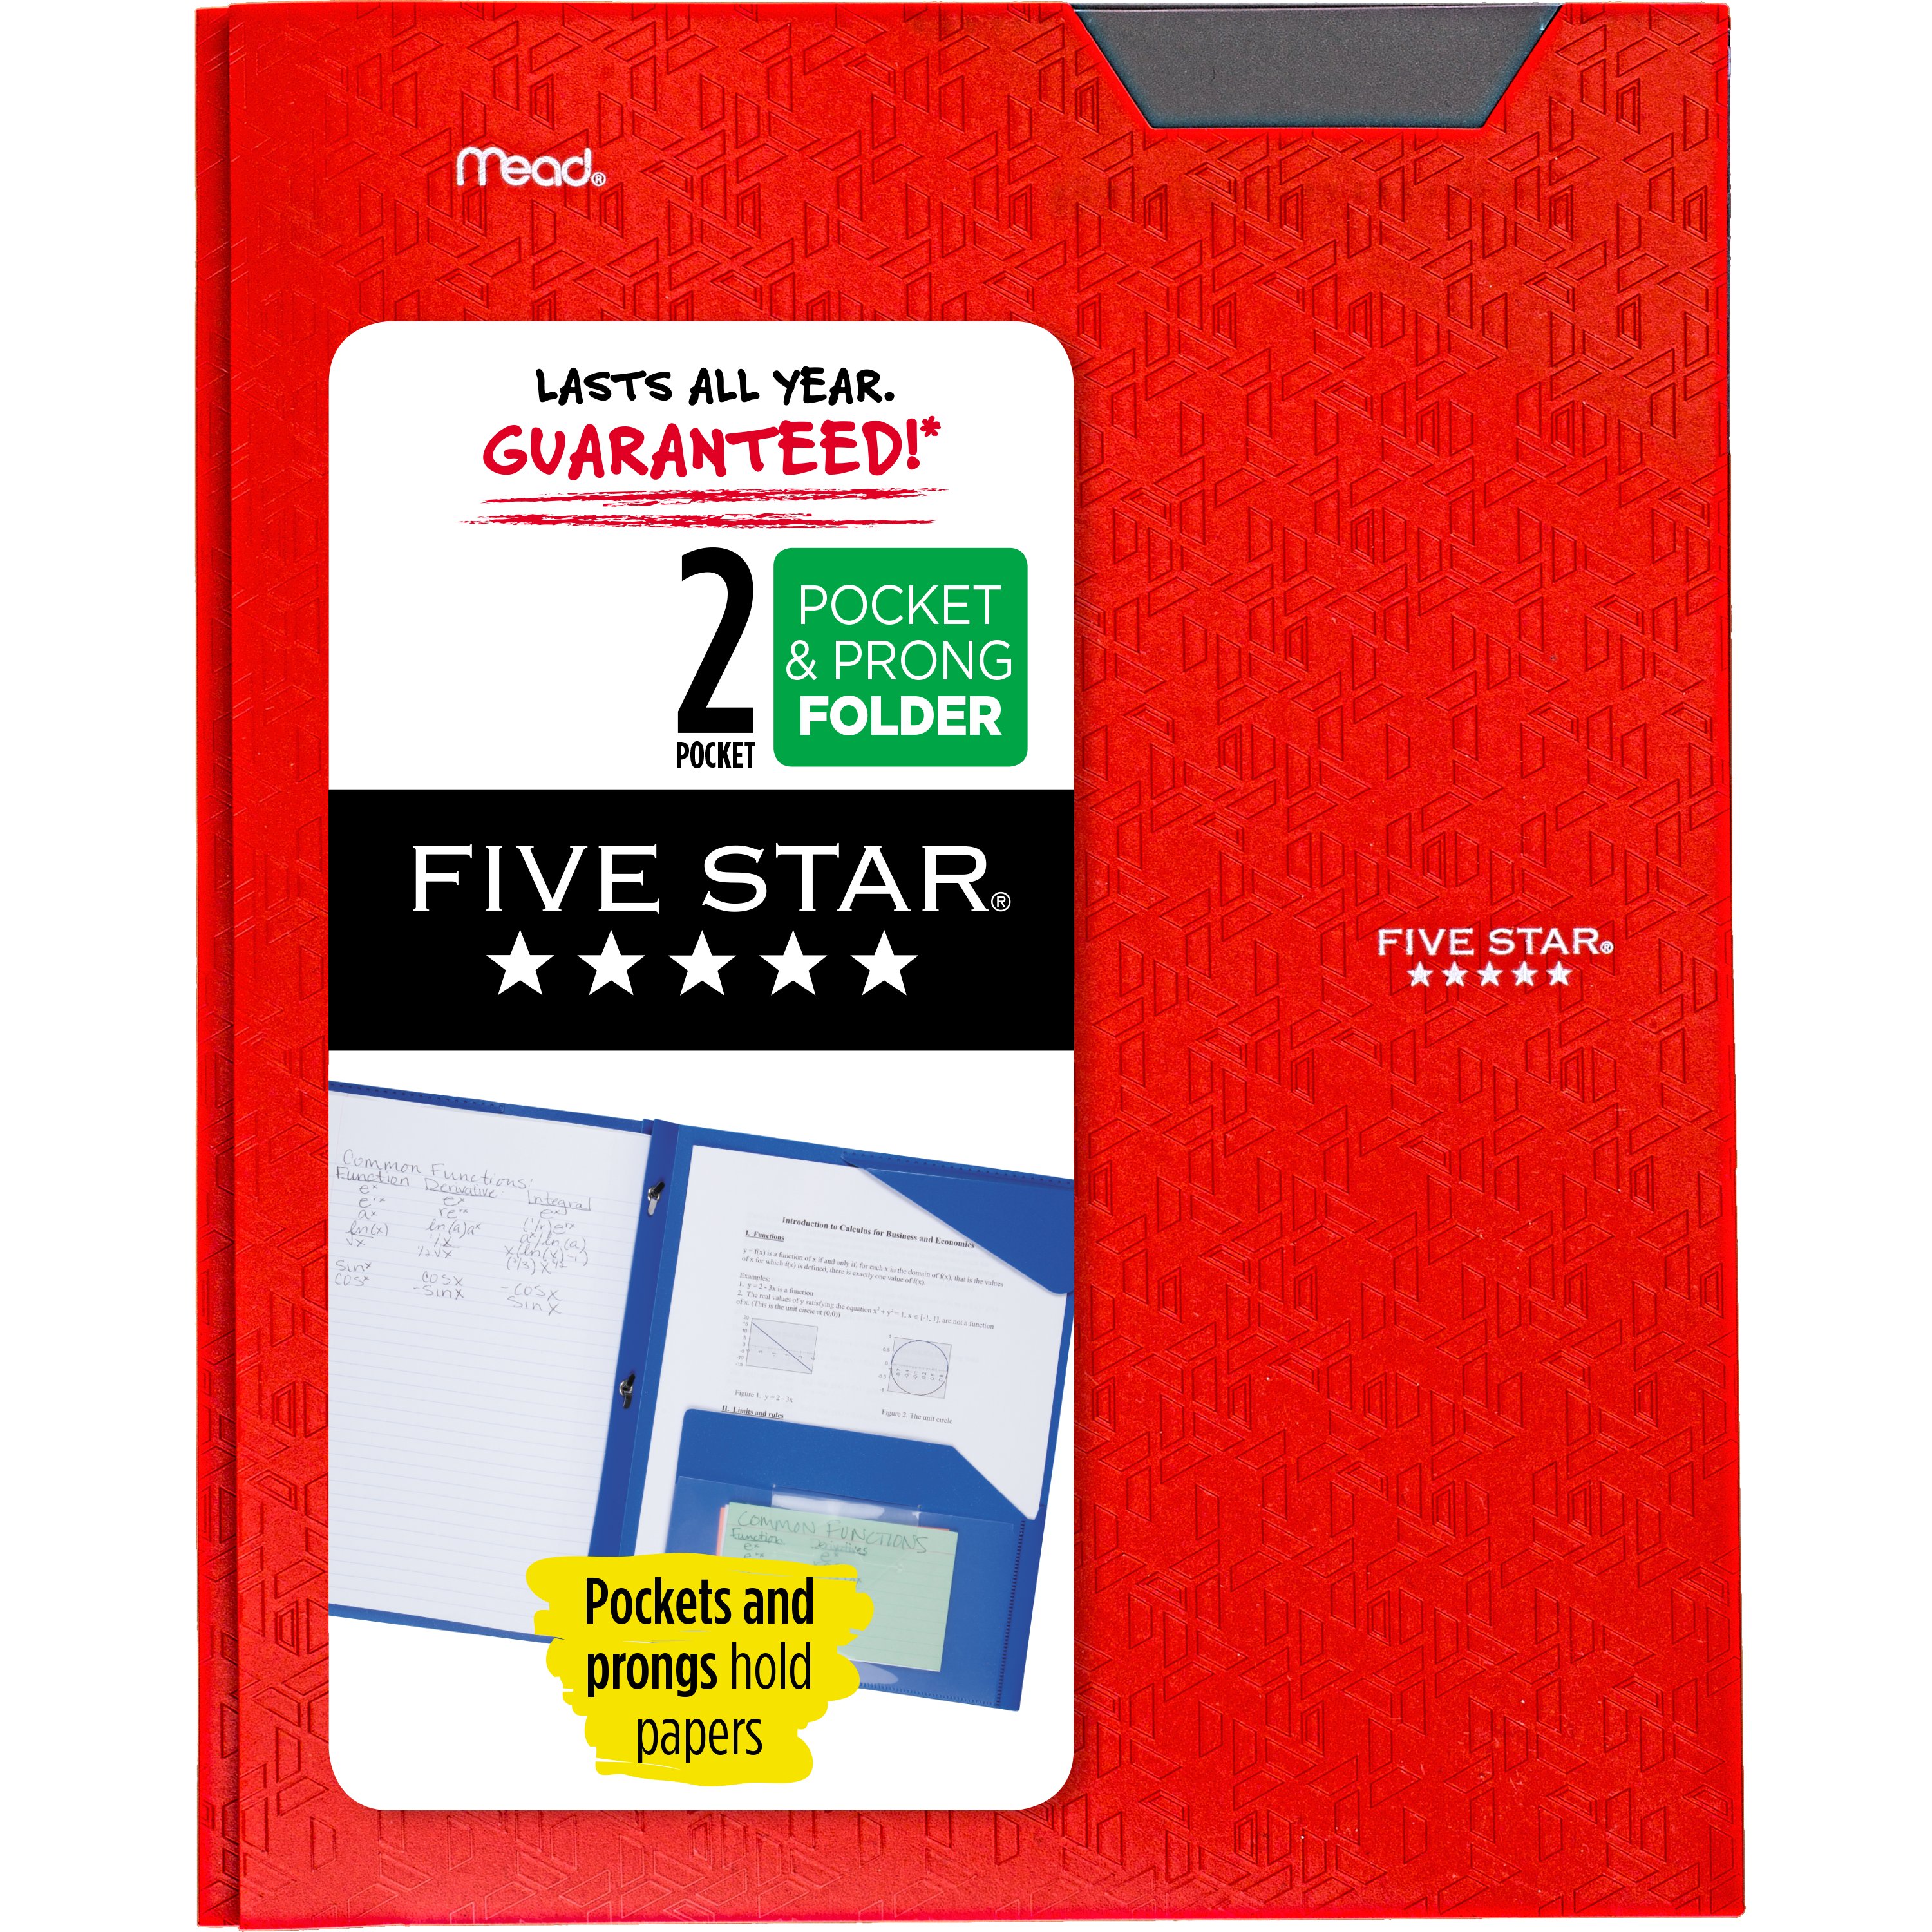 Five Star Stay-Put Pocket & Prong Folder Assorted Colors